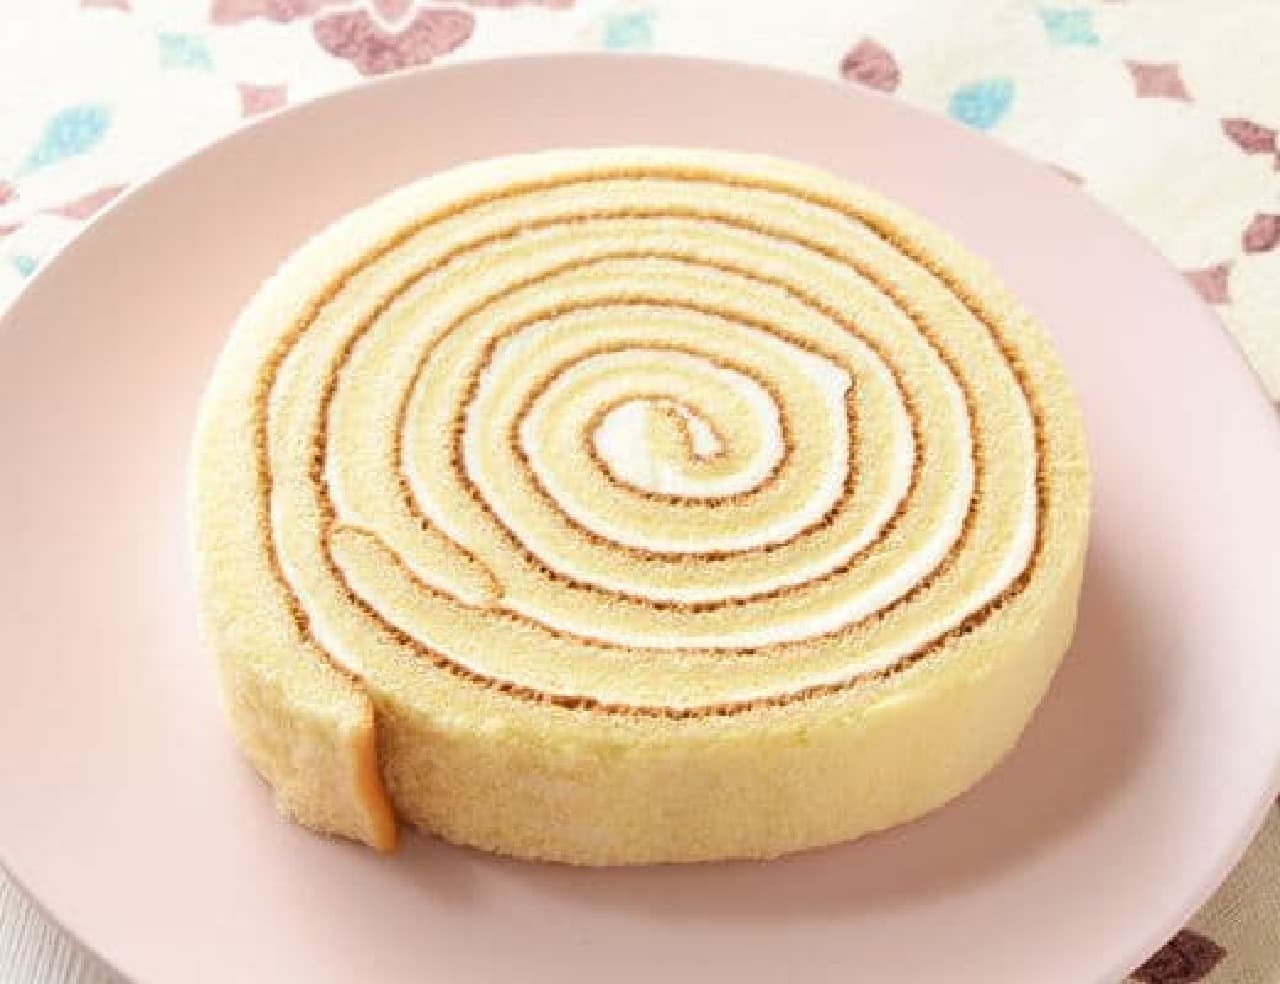 Lawson "Uzumaki Roll Cake